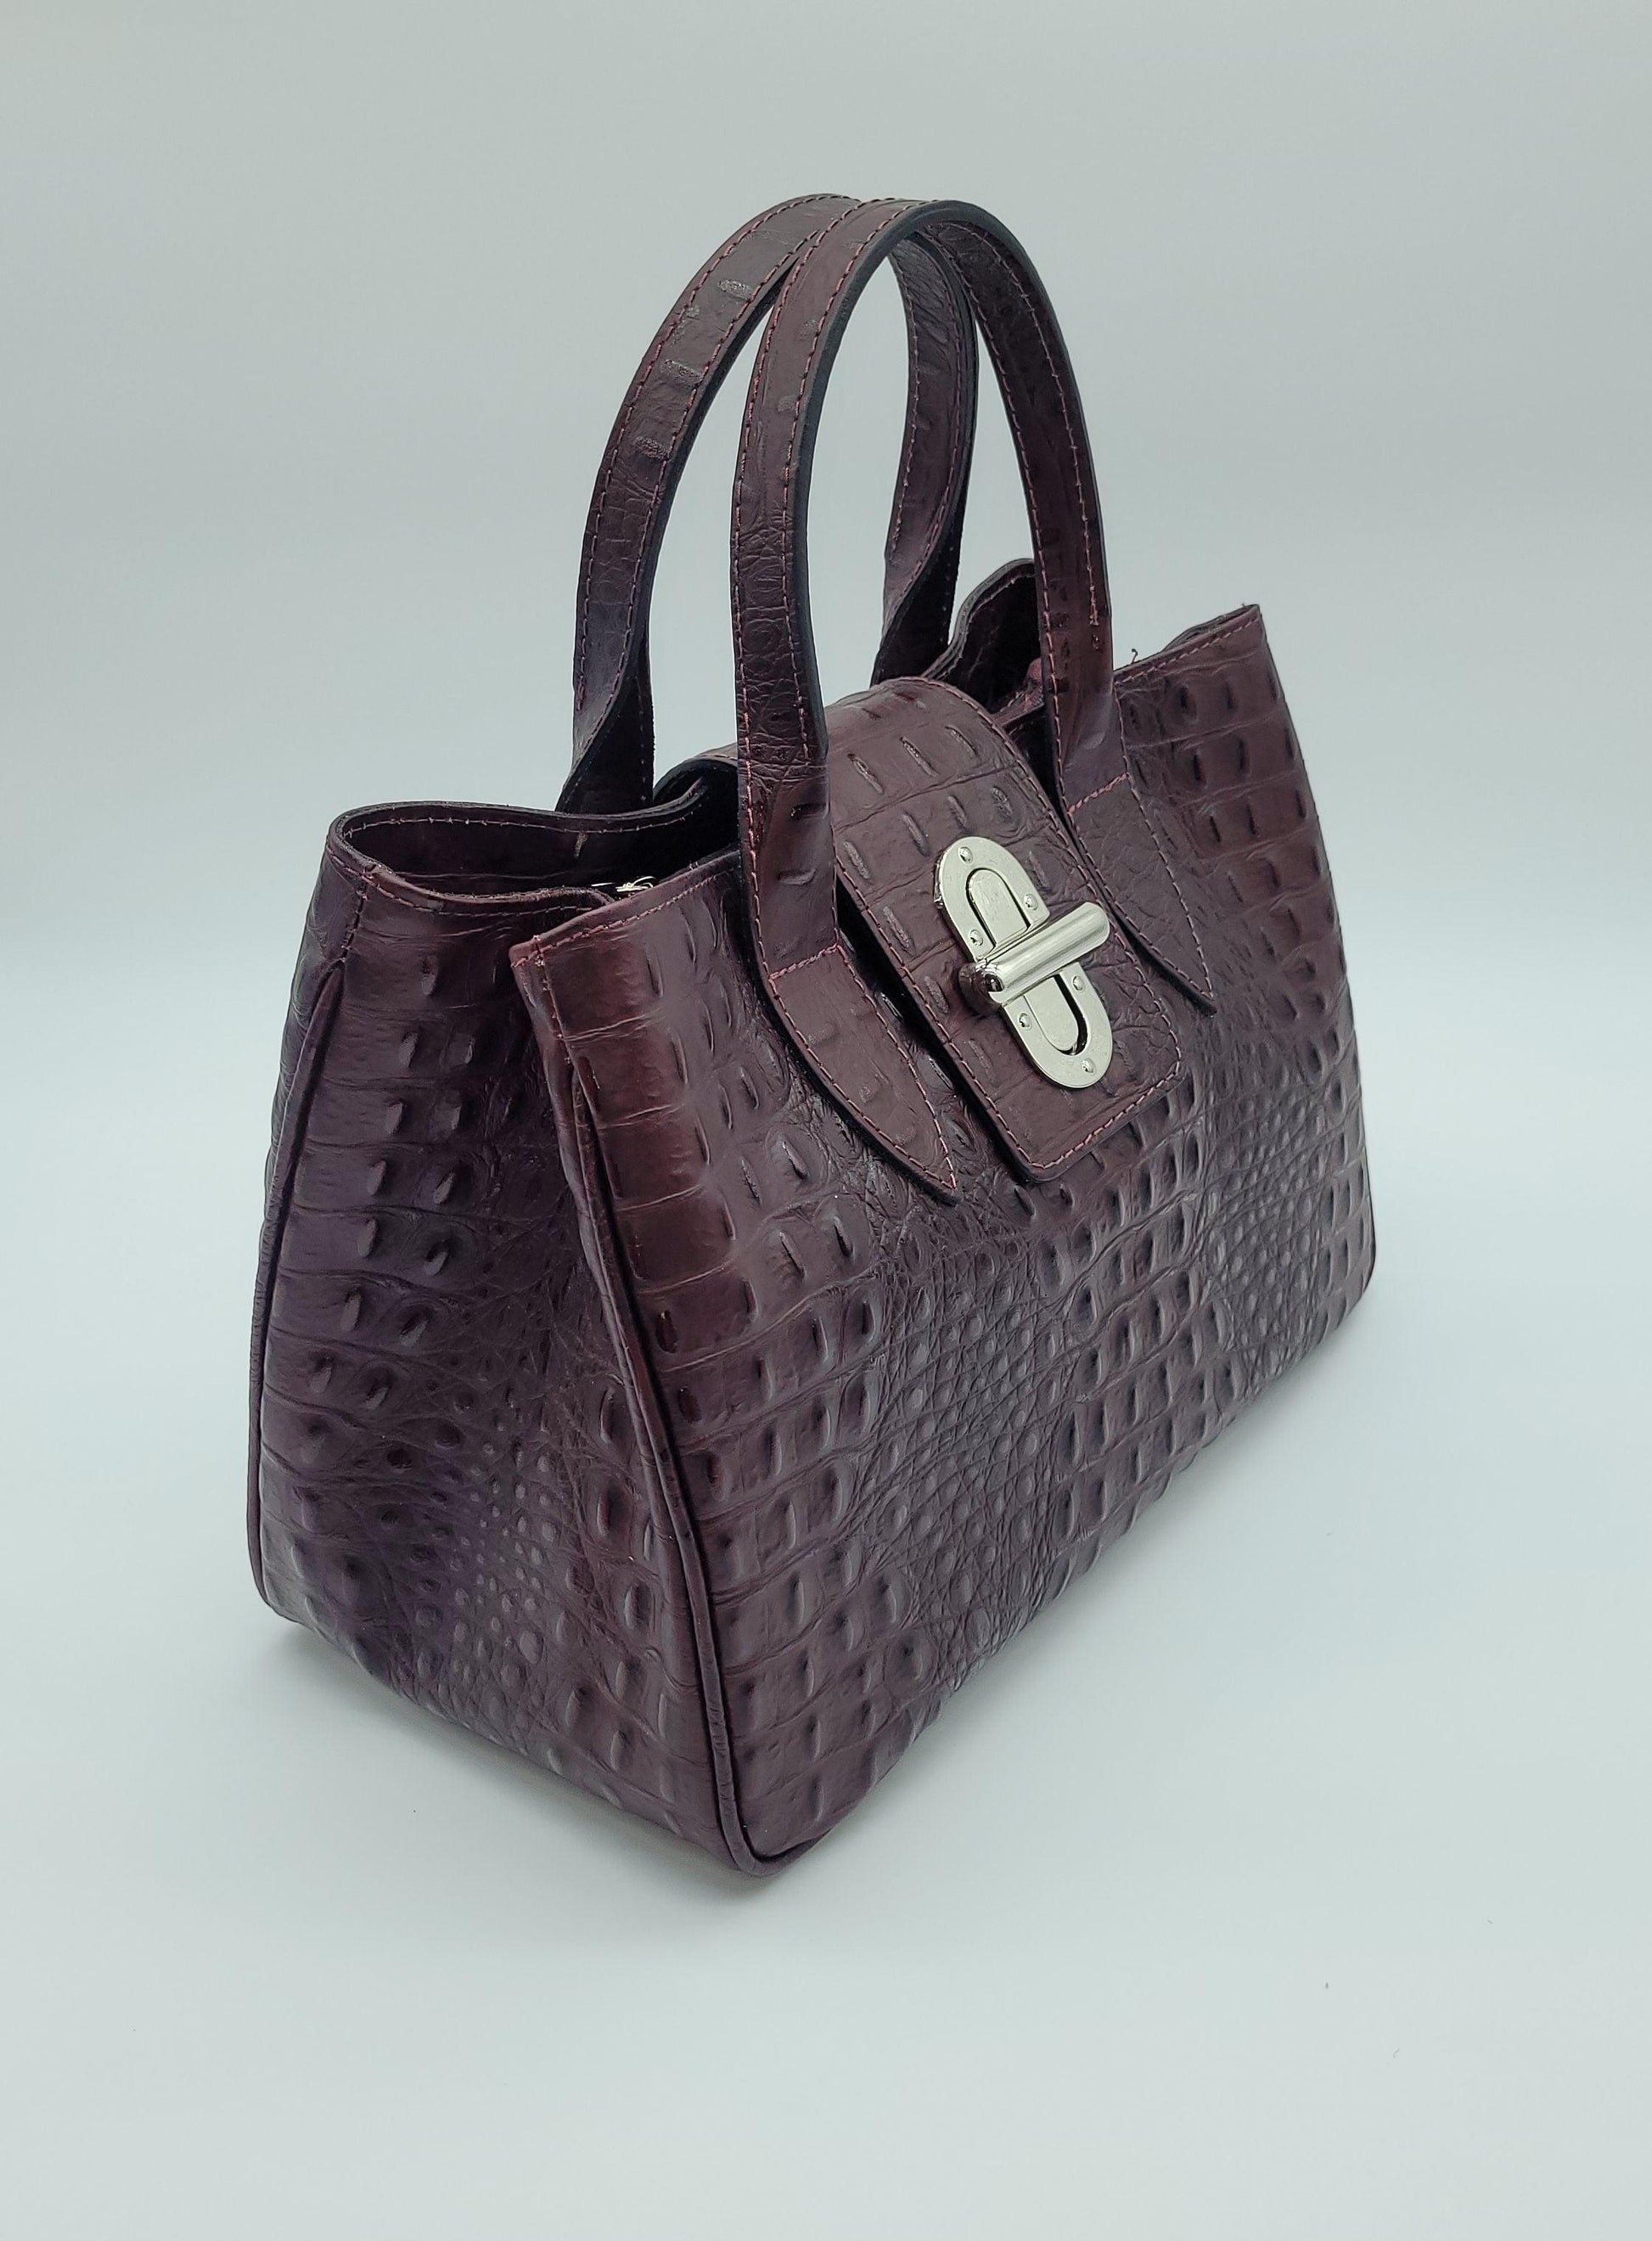  Burgundy Croc-Embossed Italian Leather Tote Handbag : Handmade  Products